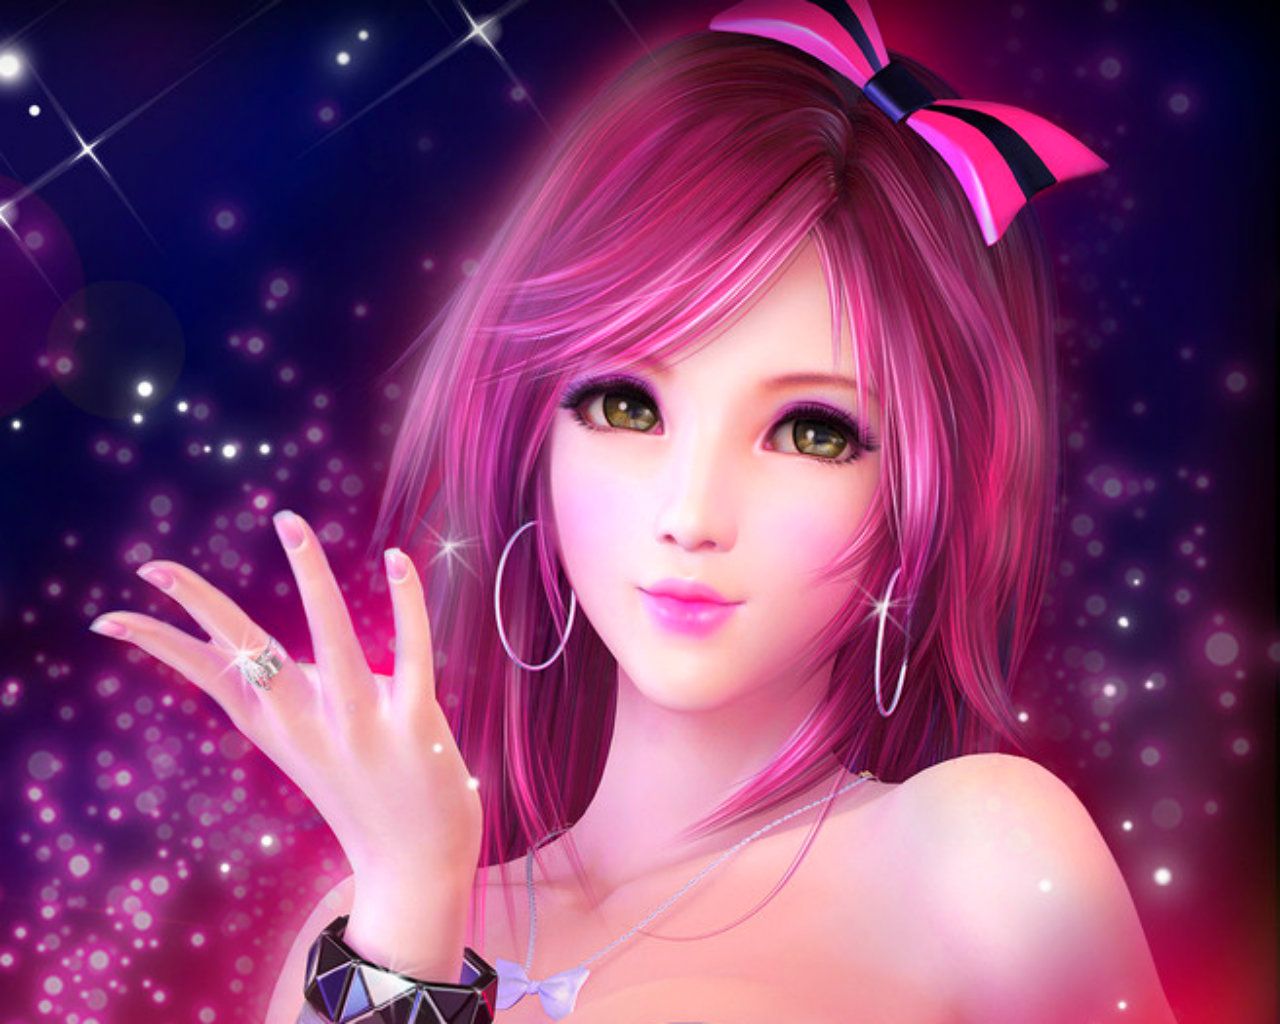 Most beautiful fantasy girl face expression digital art painting HD wallpaper